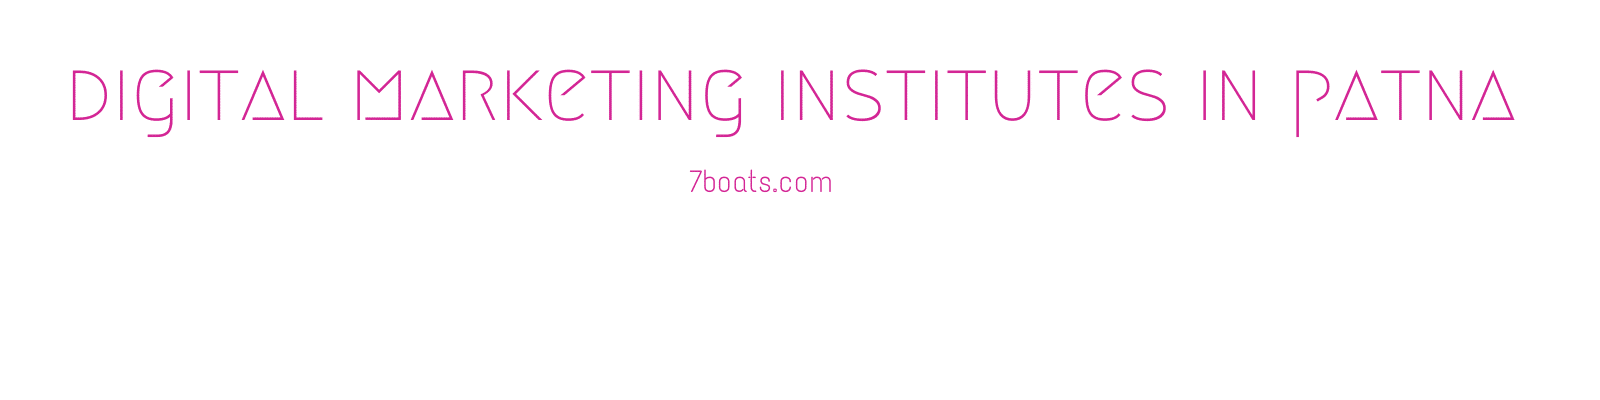 Popular Digital Marketing Training Institutes in Patna – Best Digital Marketing Courses in Patna